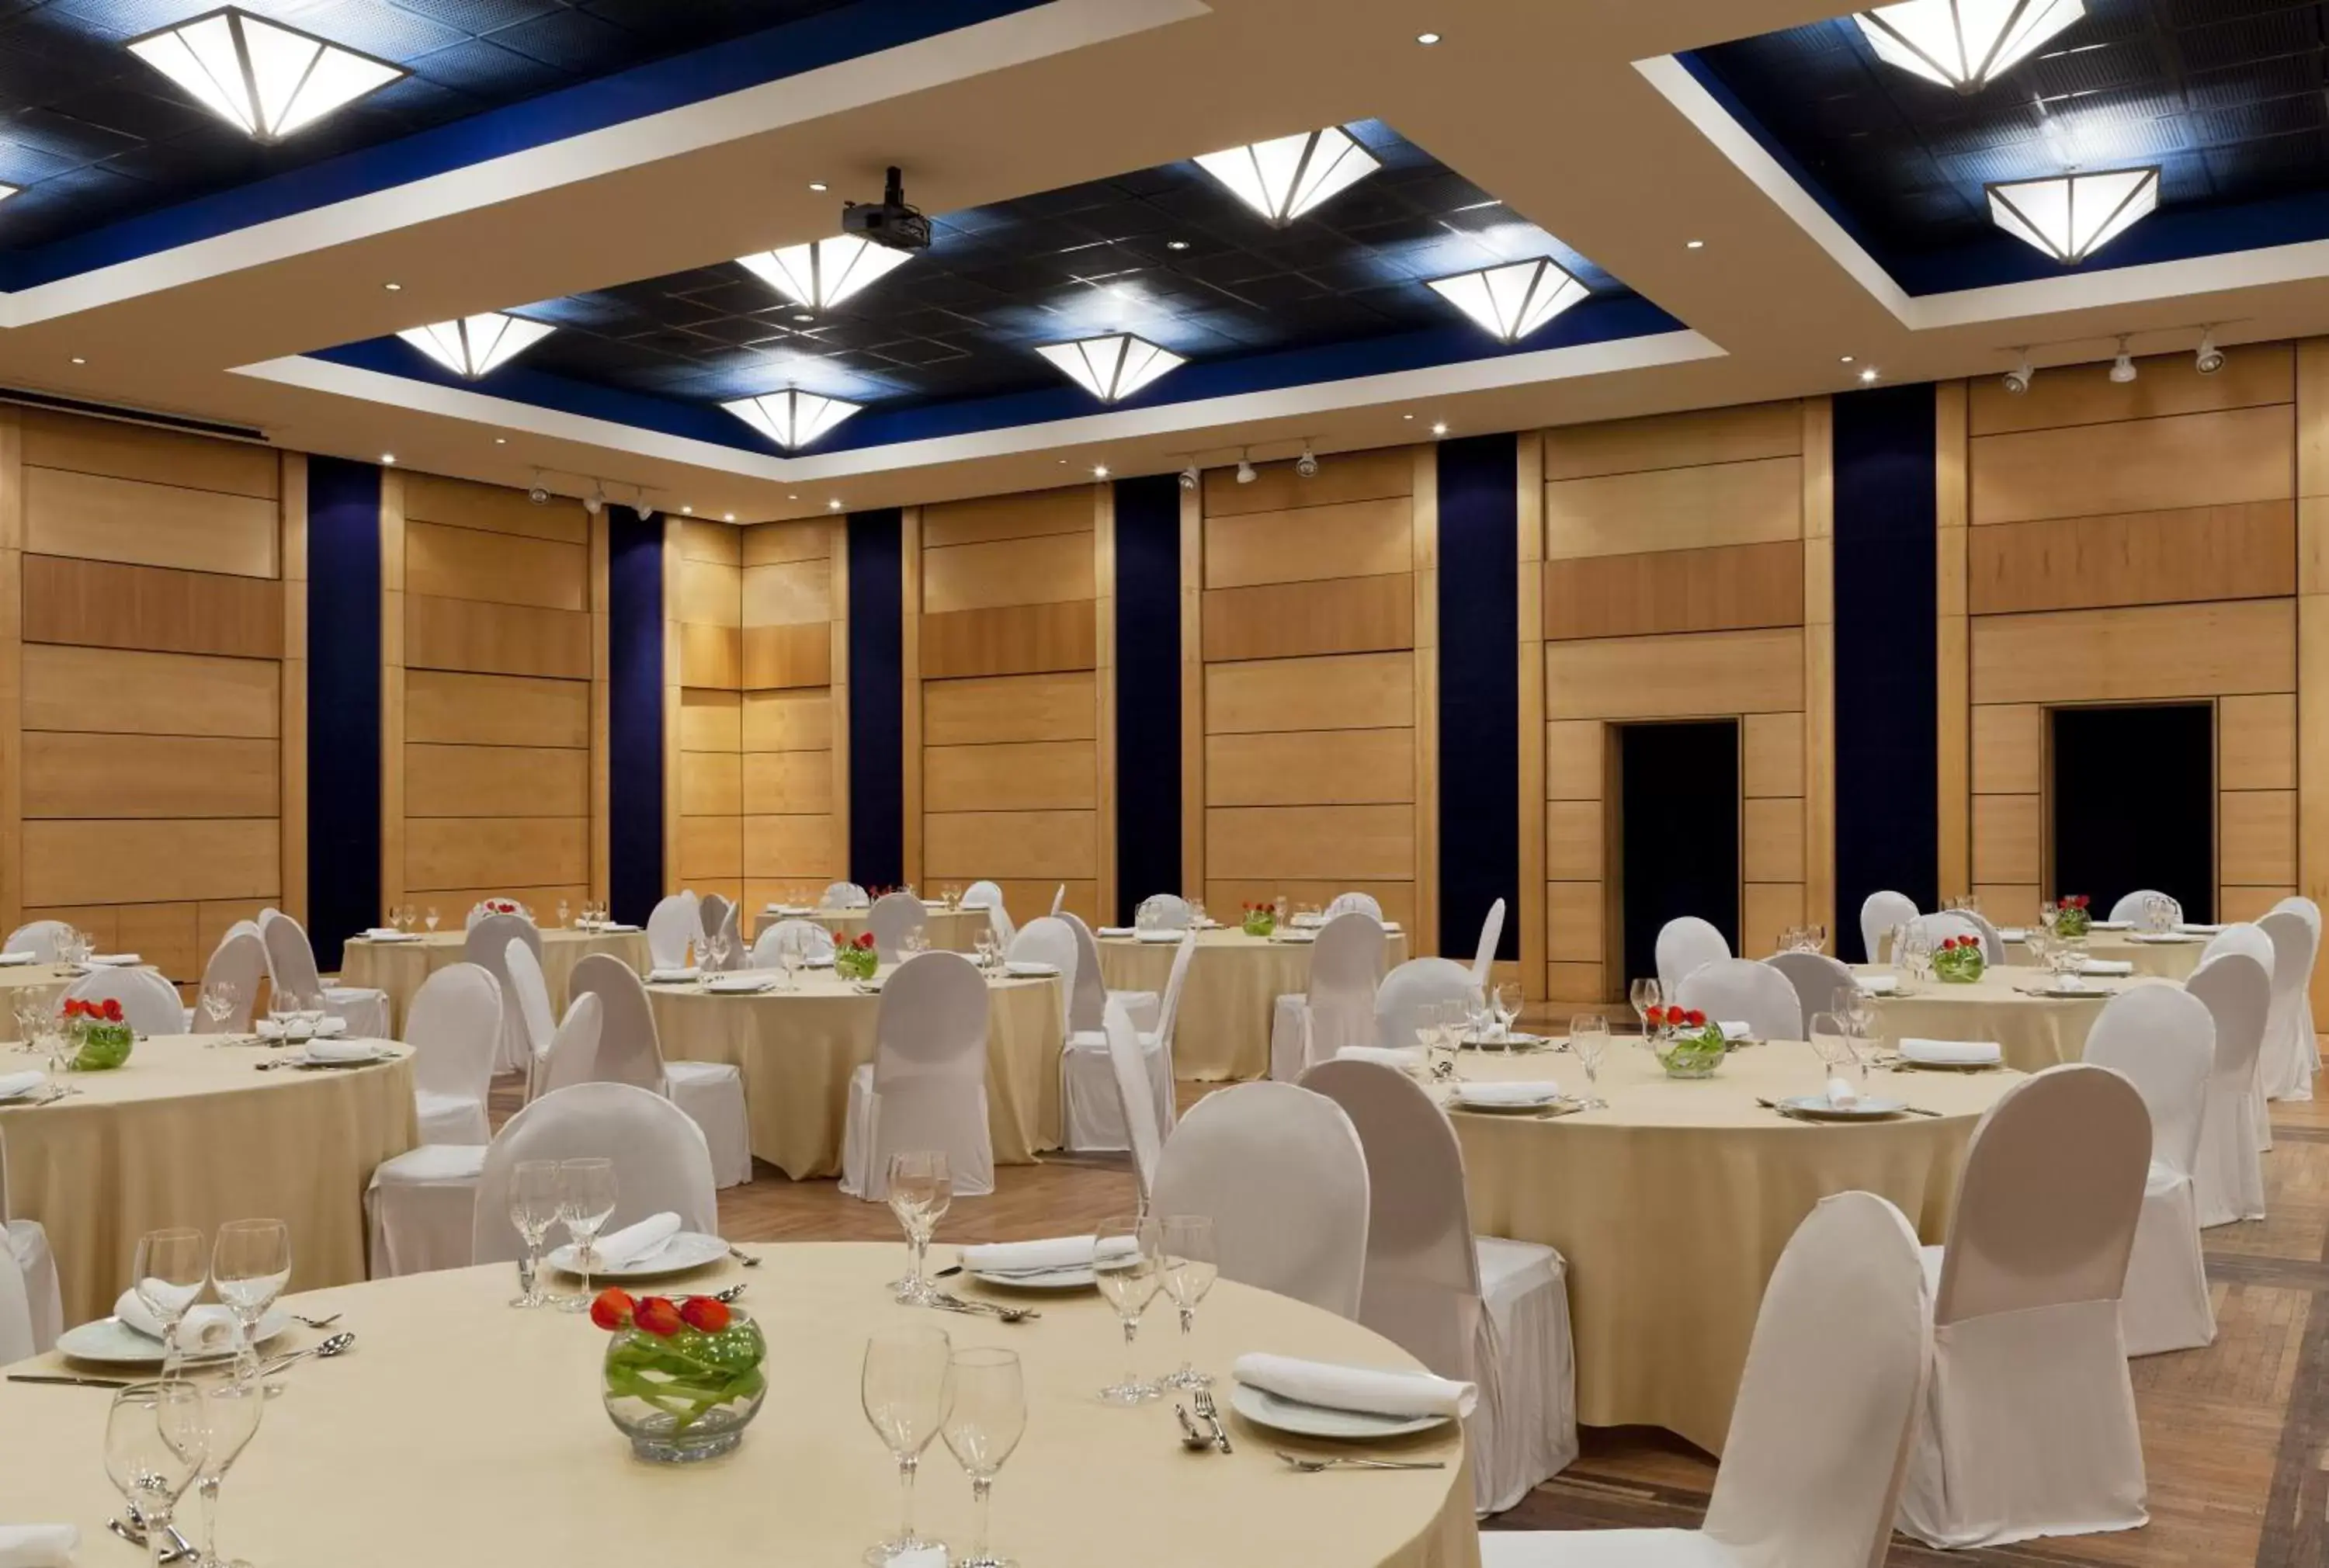 Business facilities, Banquet Facilities in Mak Albania Hotel